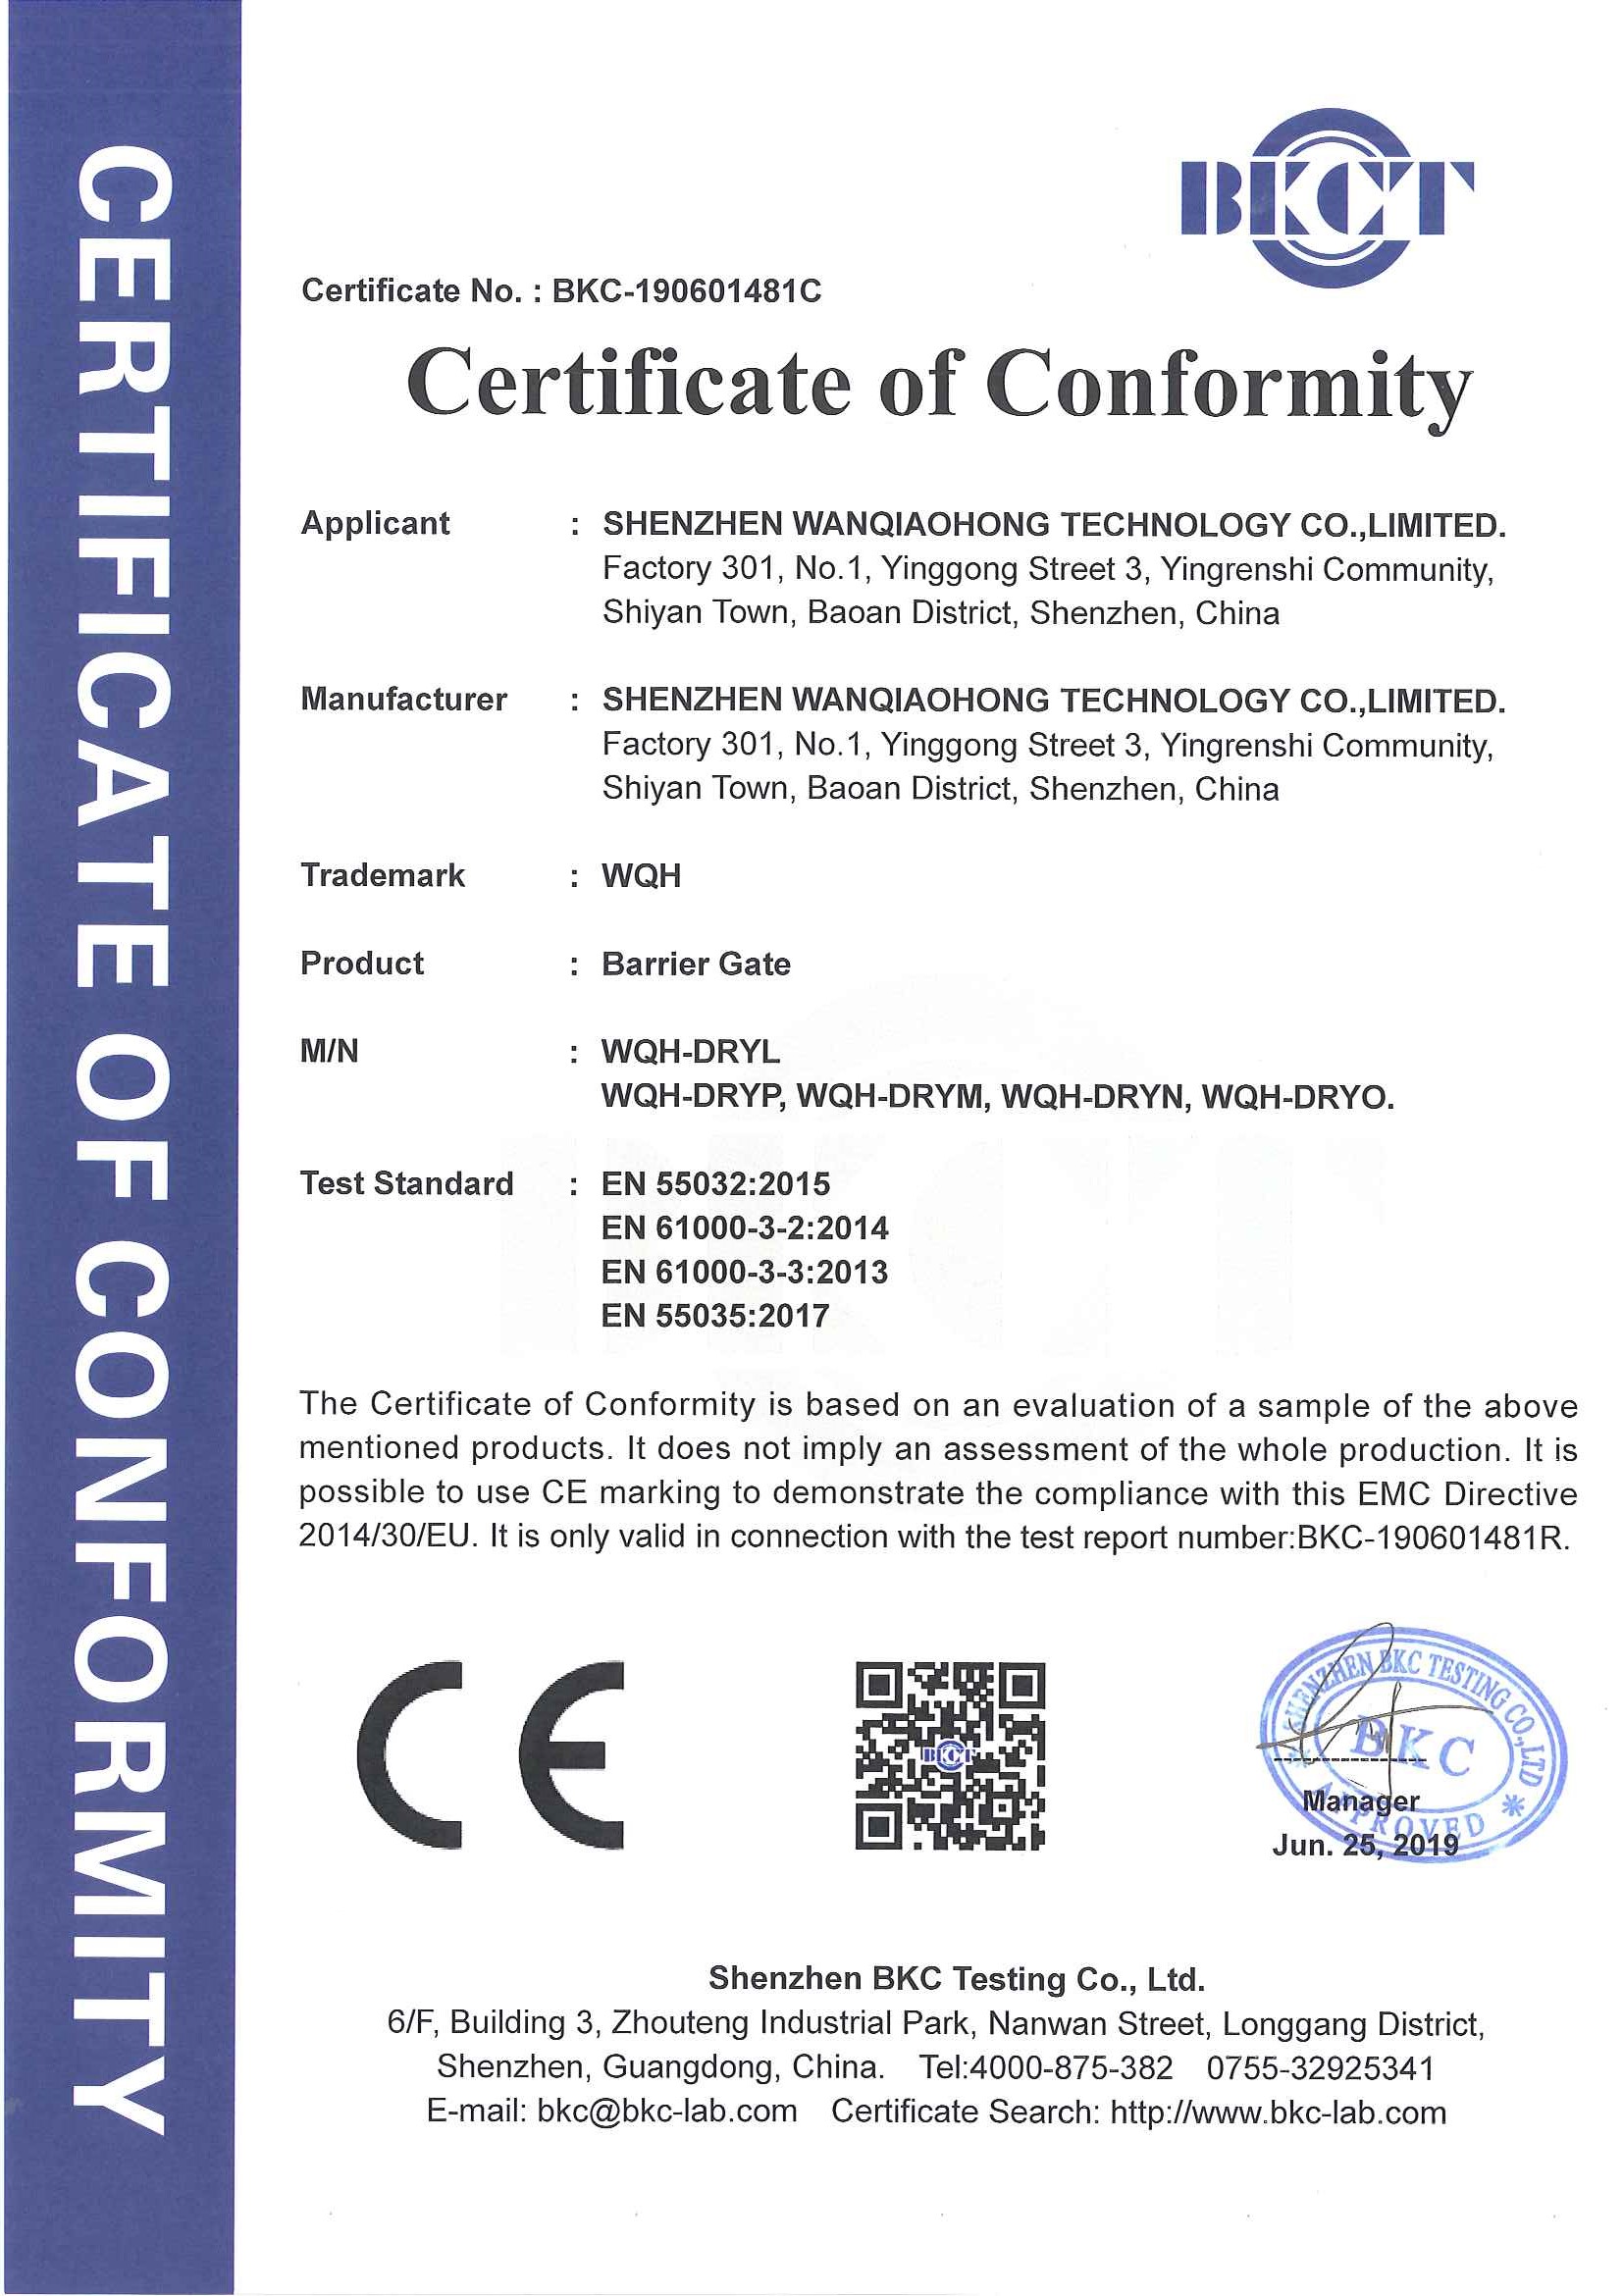 CE certificate (barrier gate)